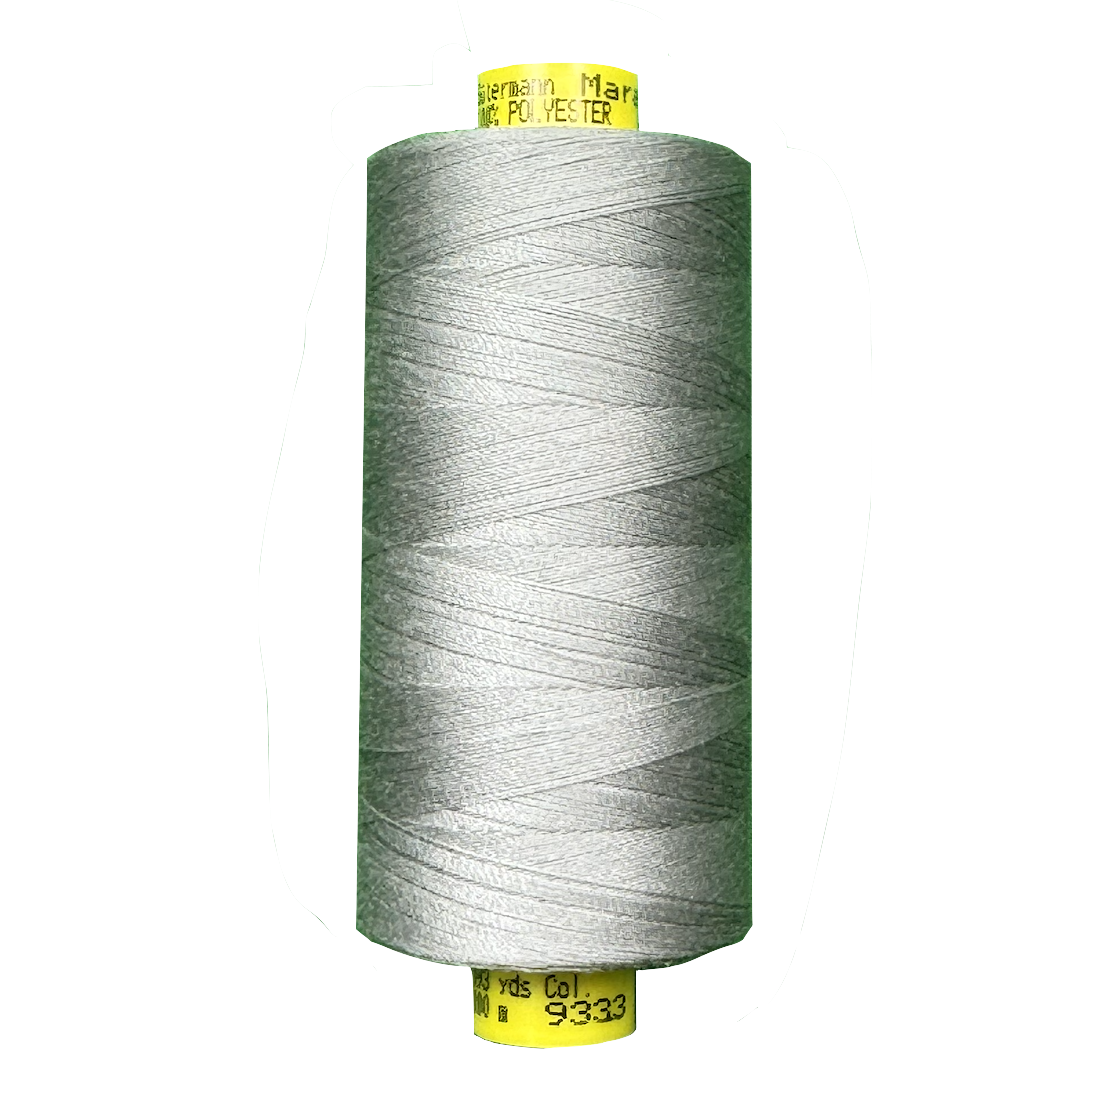 Gutermann Recycled Polyester Thread – Bolt & Spool